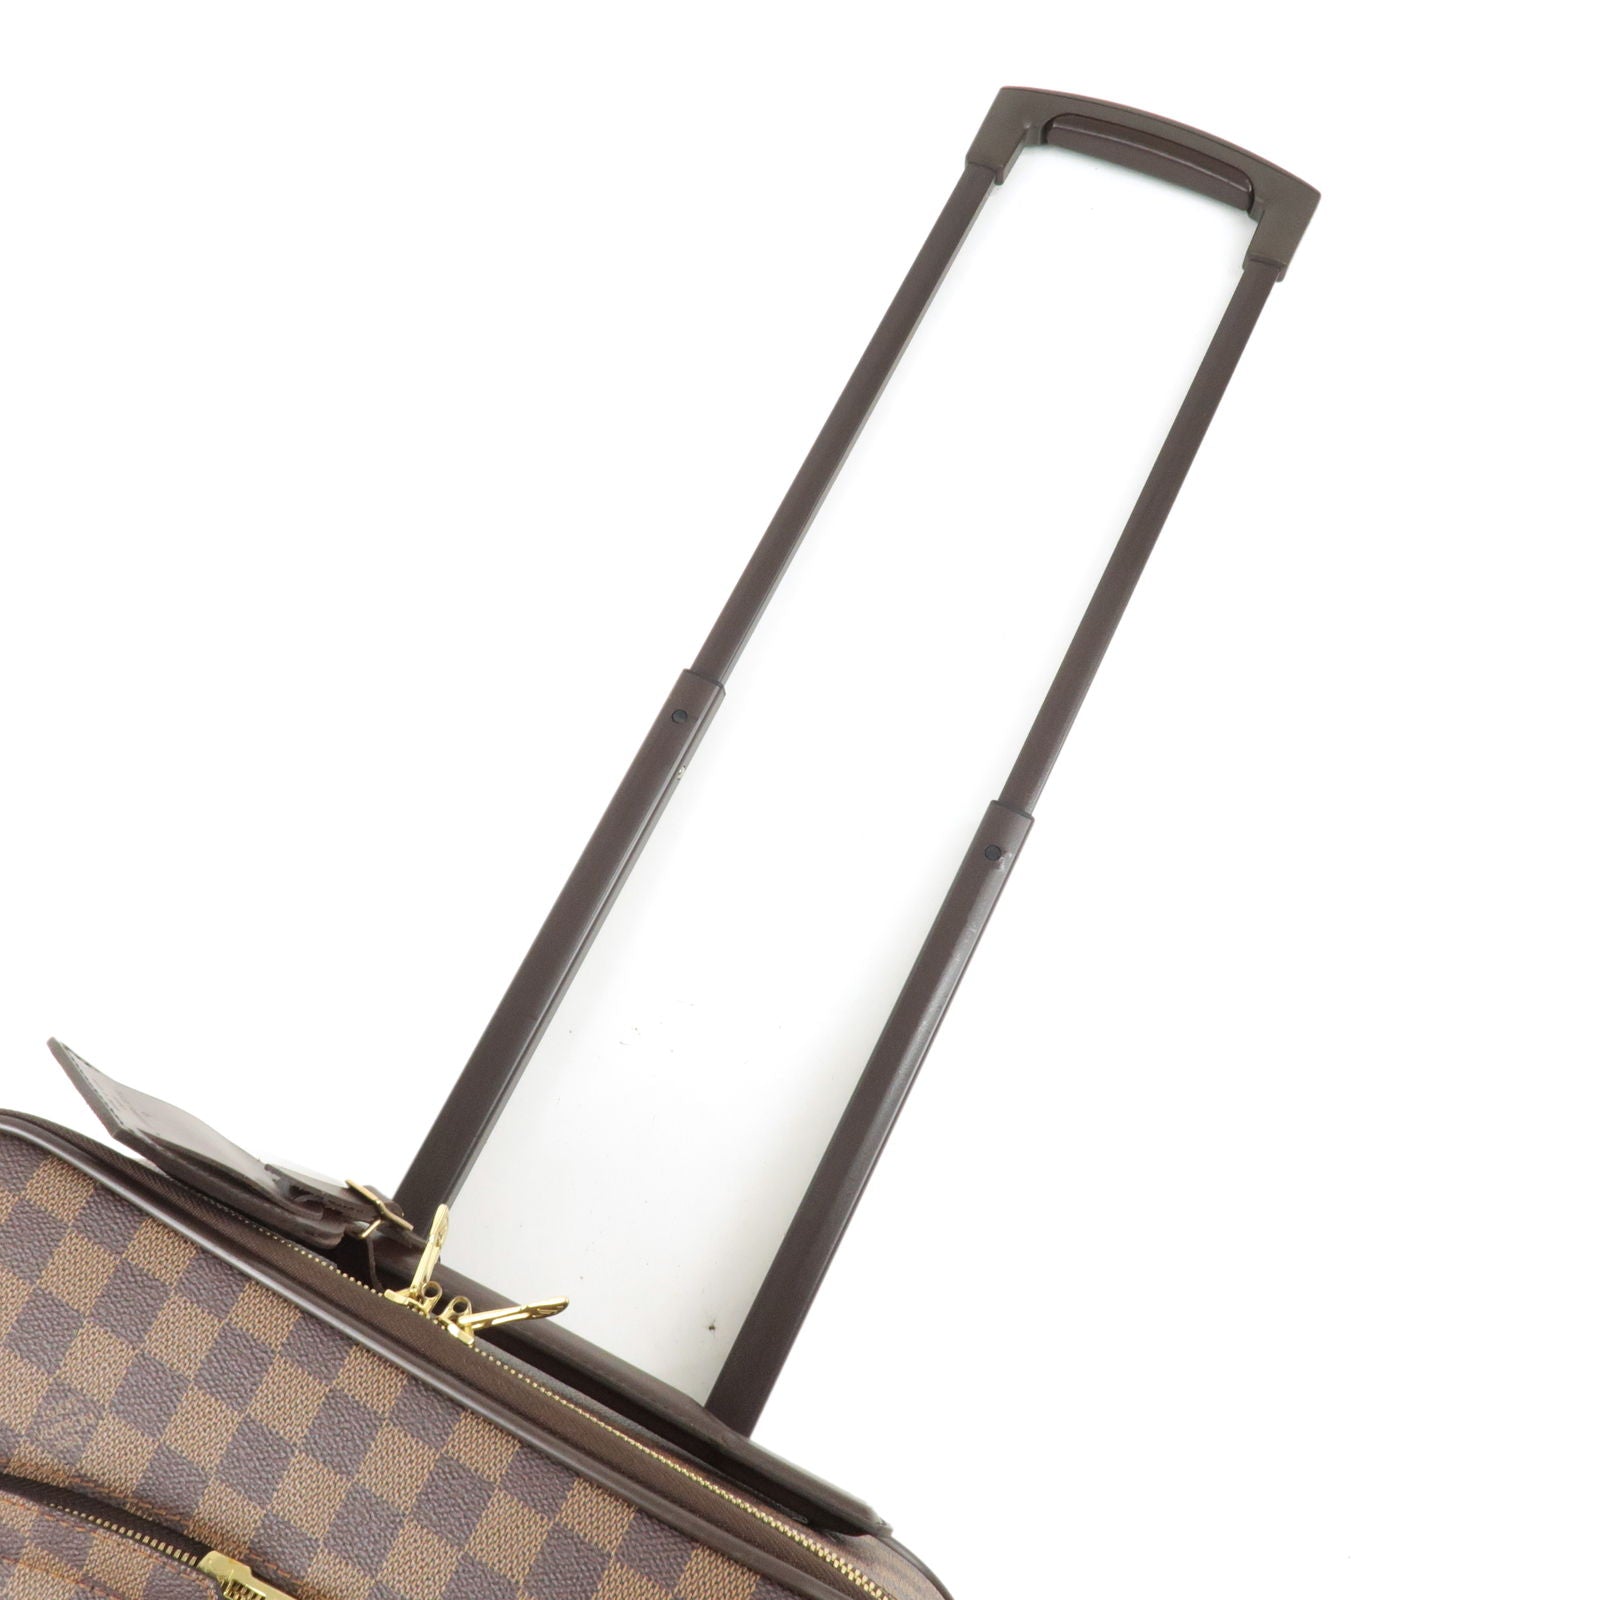 Louis Vuitton Damier Graphite Pegase 45 Rolling Luggage Trolley